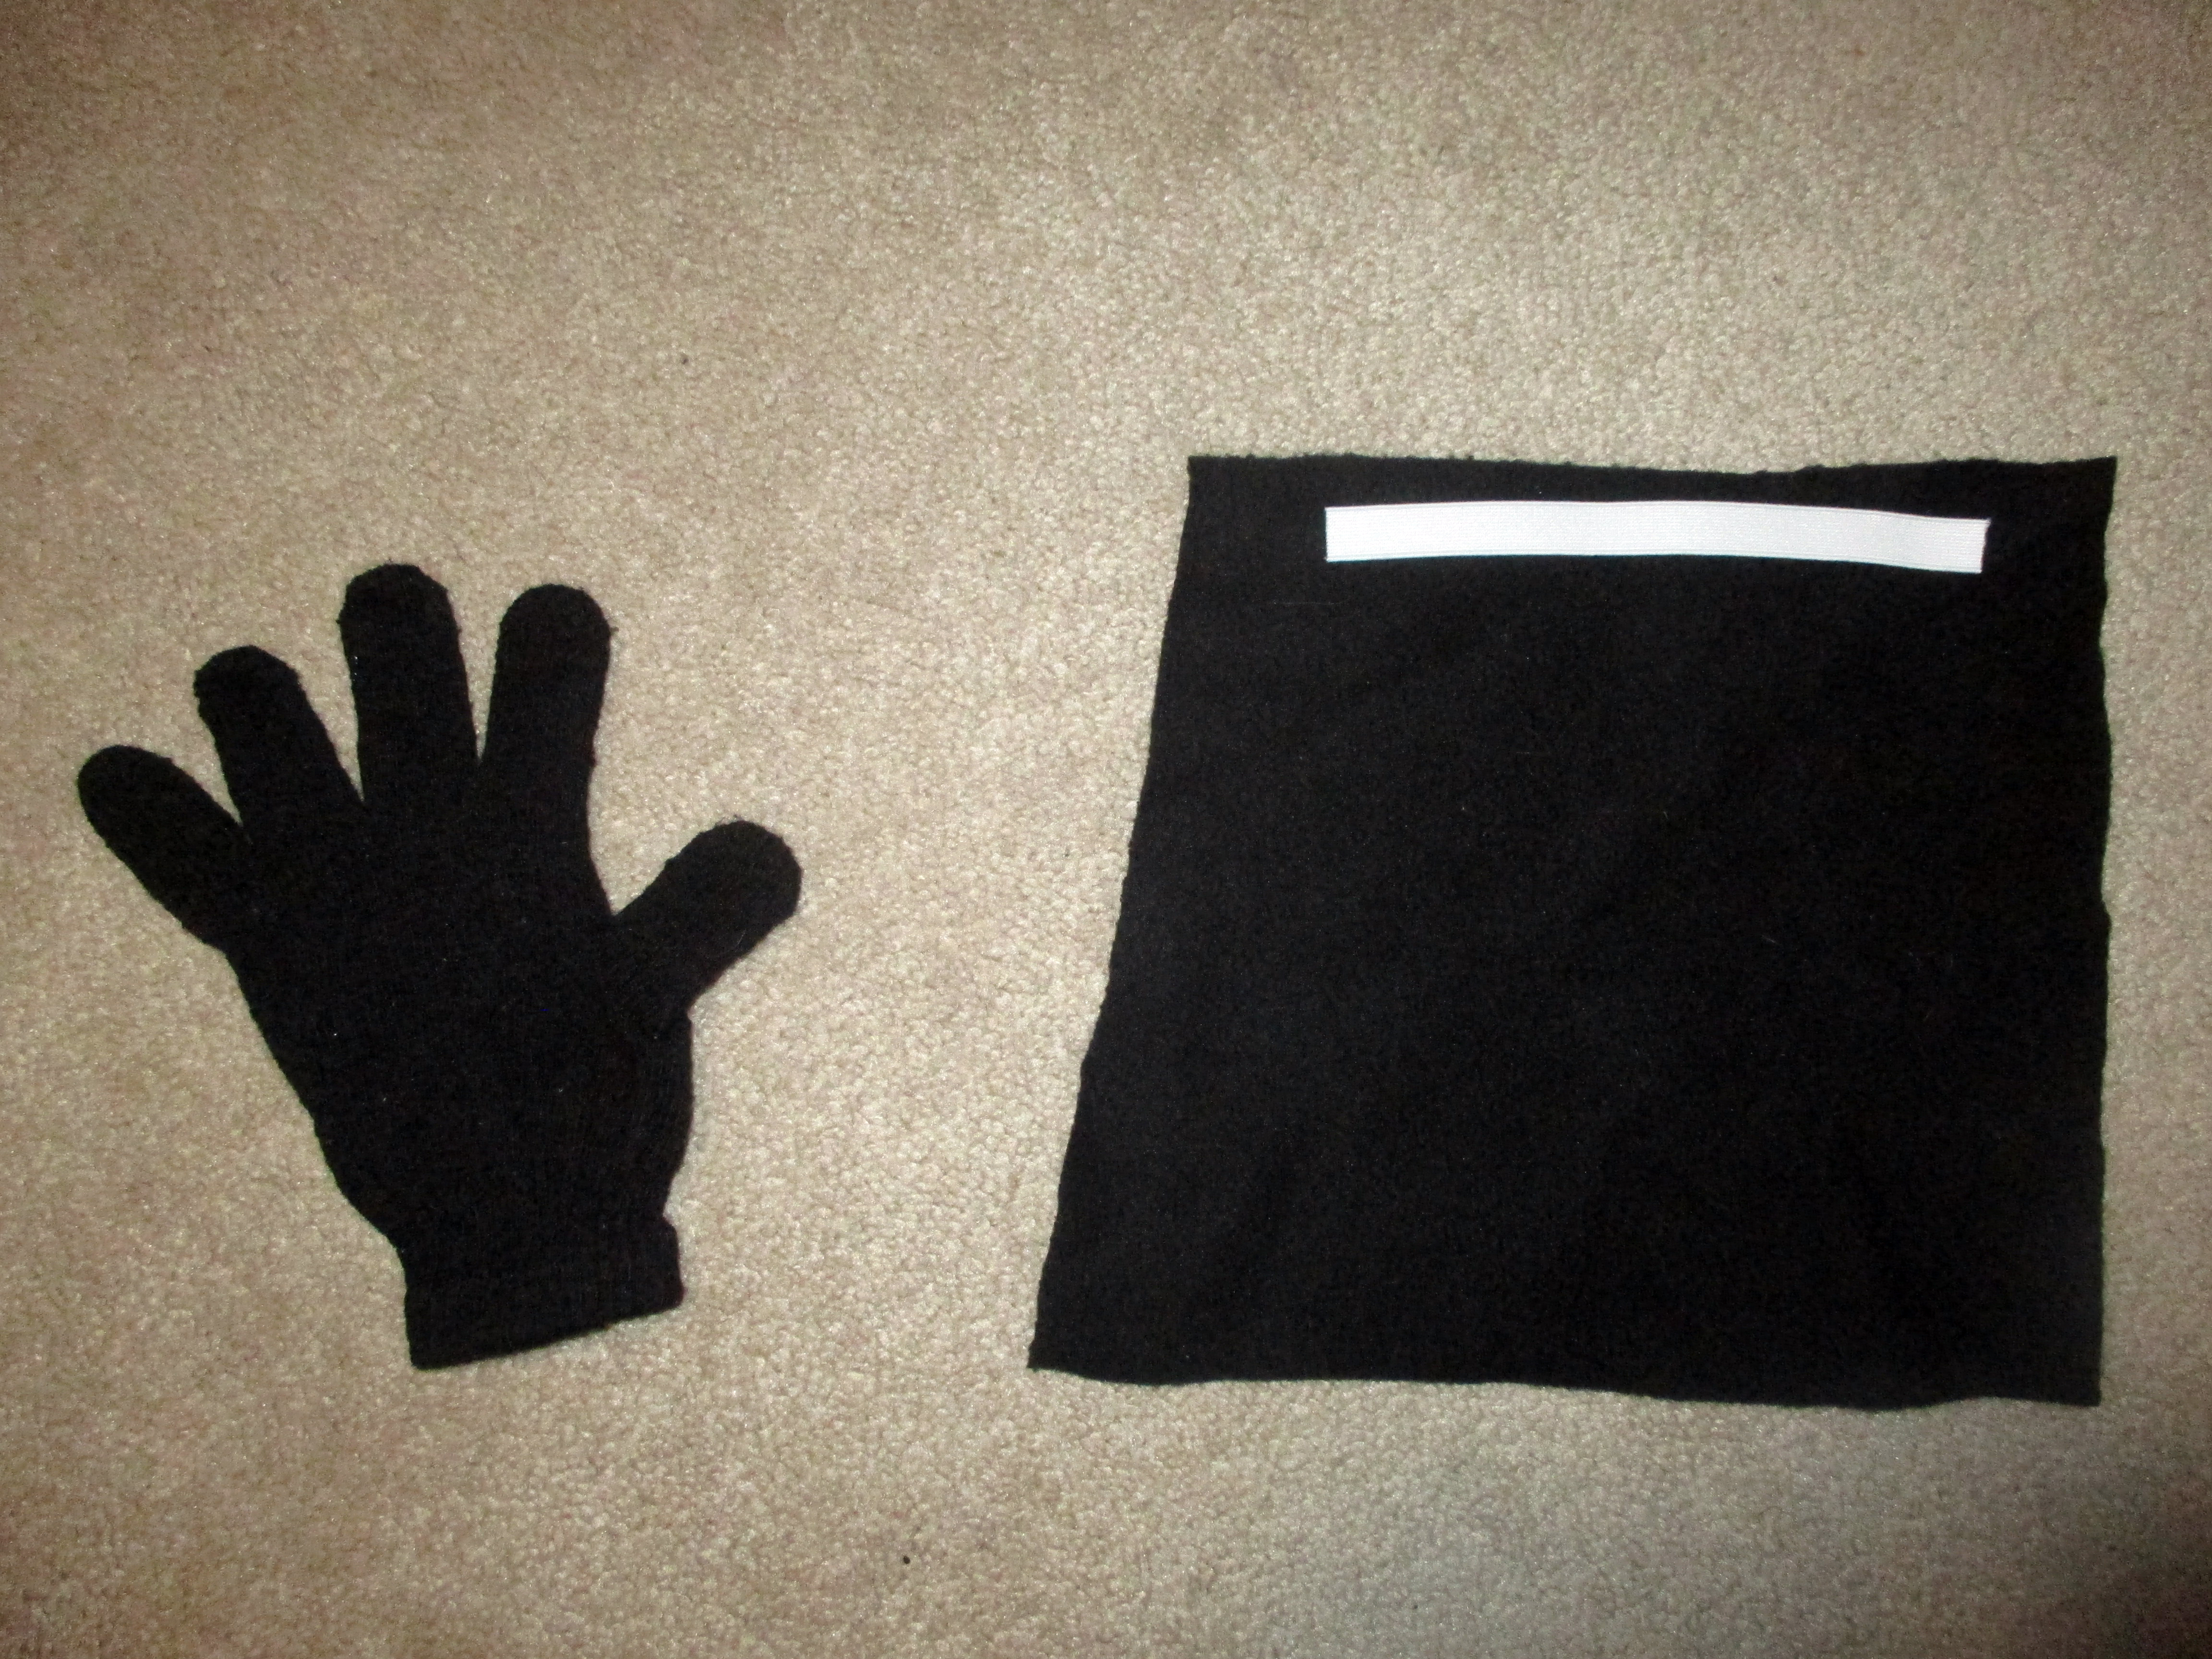 Black Panther Gloves